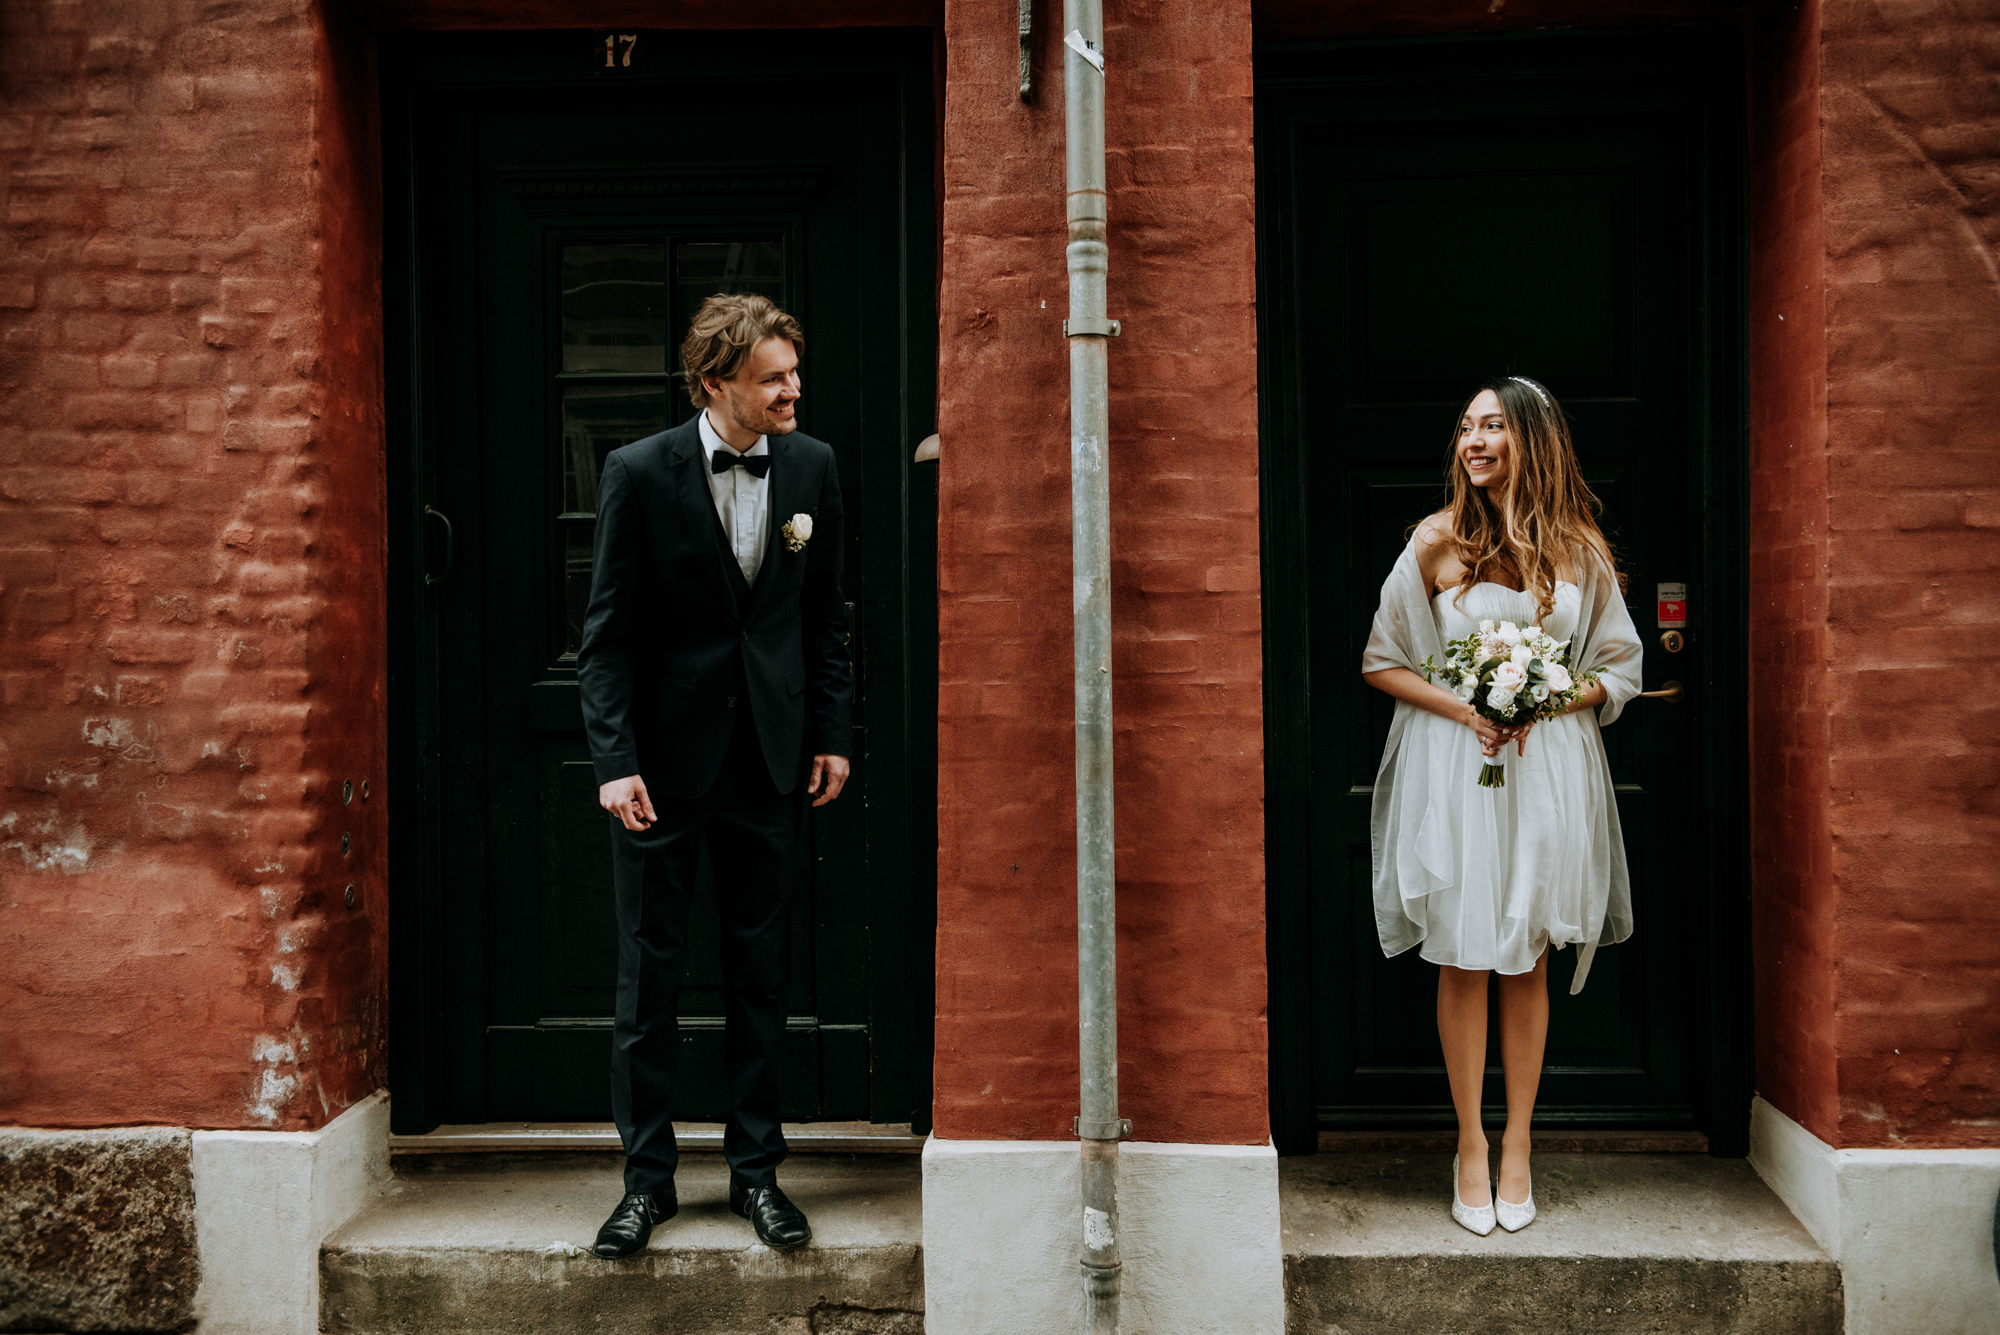 Wedding photographer Copenhagen